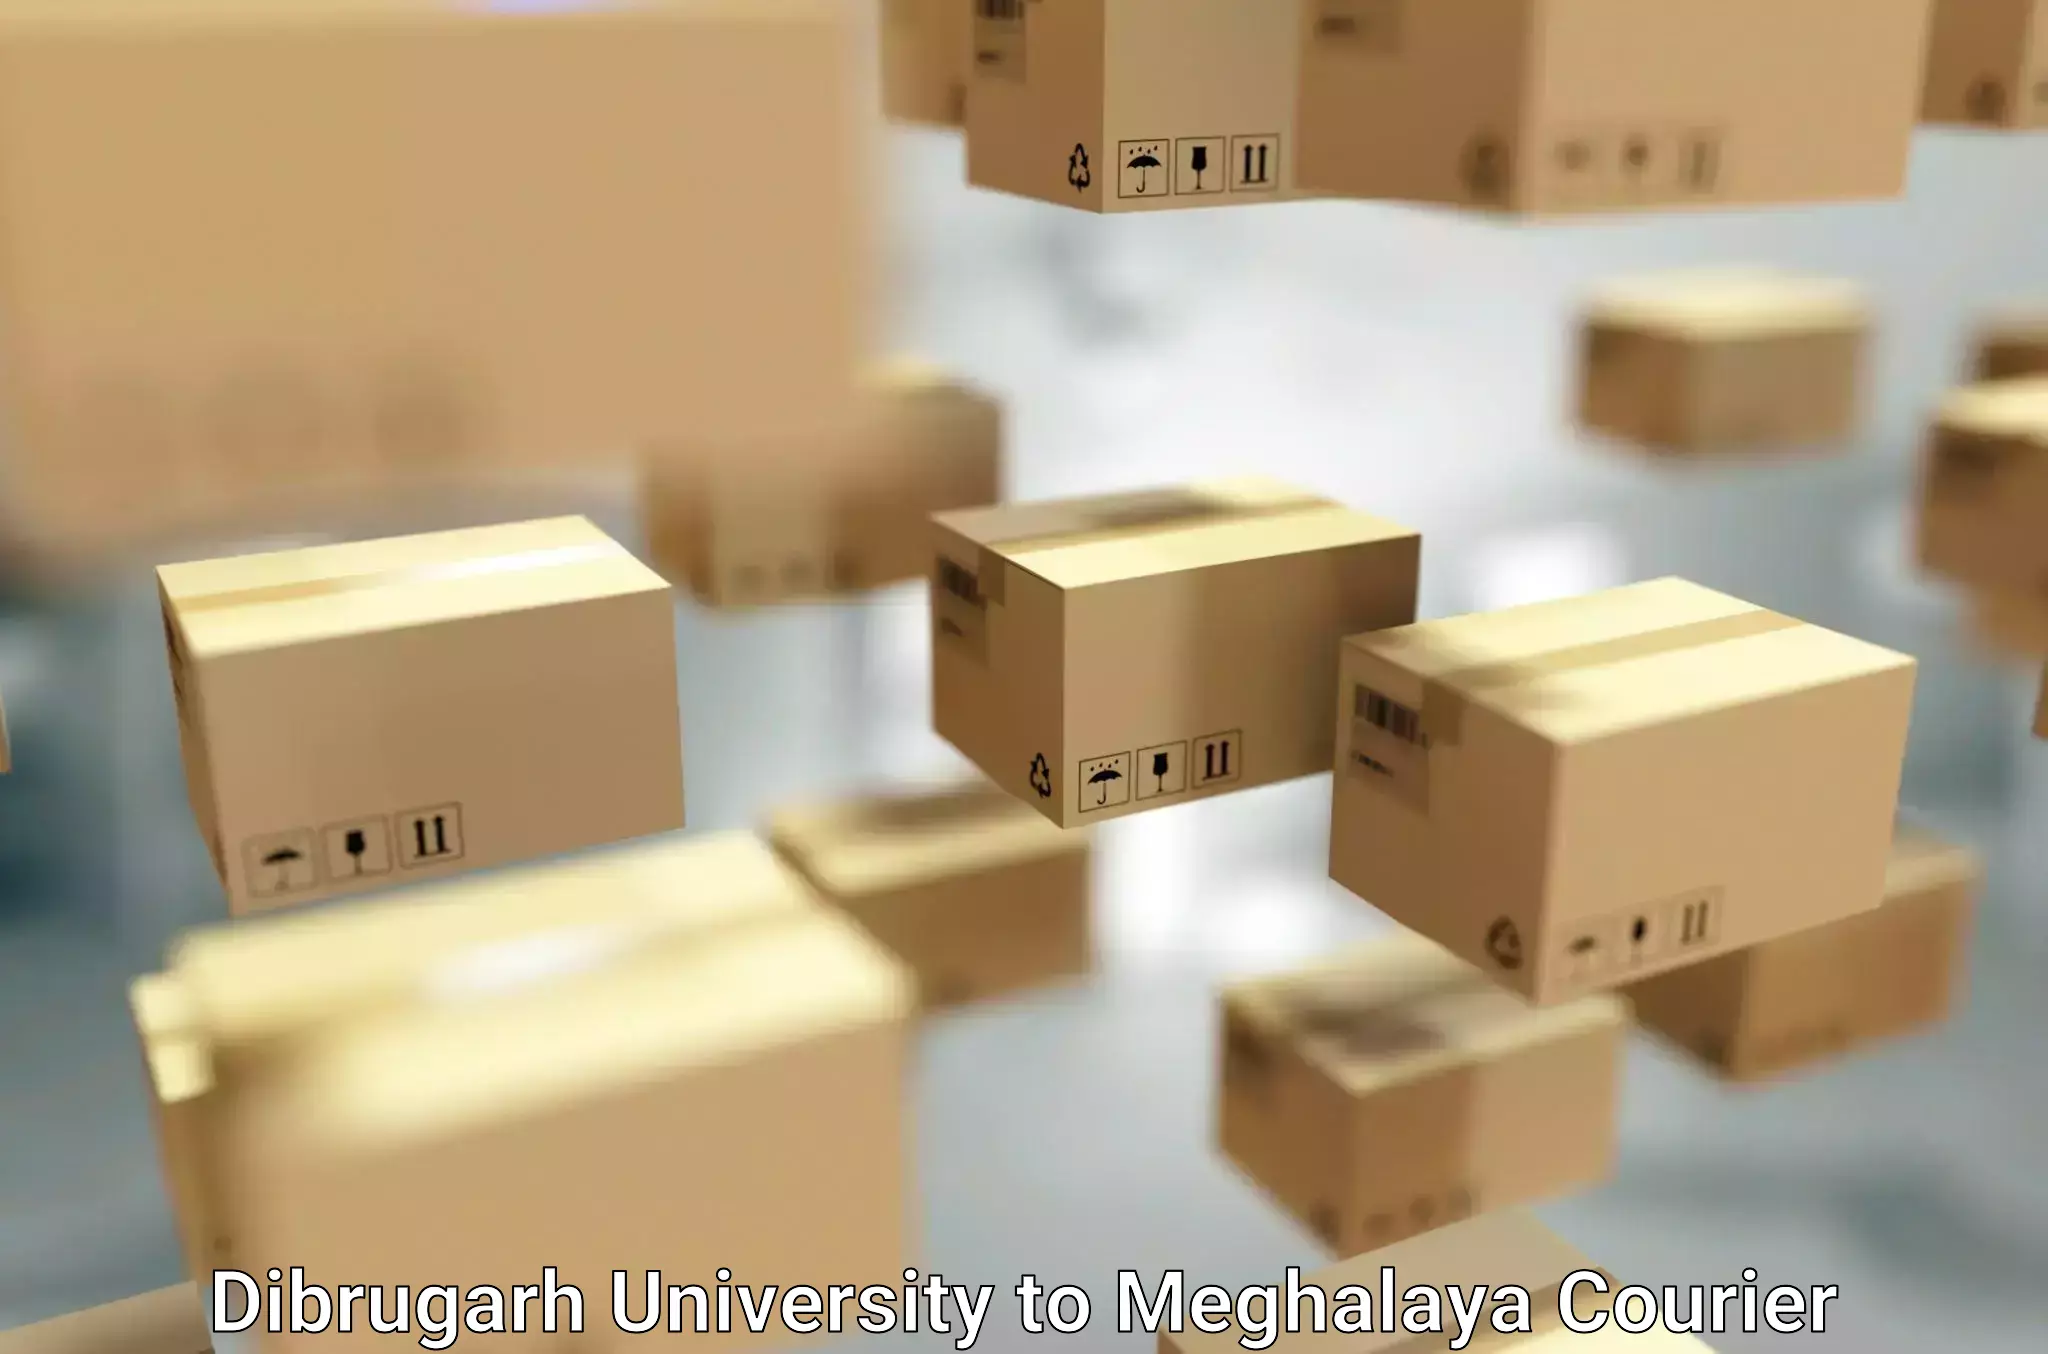 Trusted moving company Dibrugarh University to Meghalaya